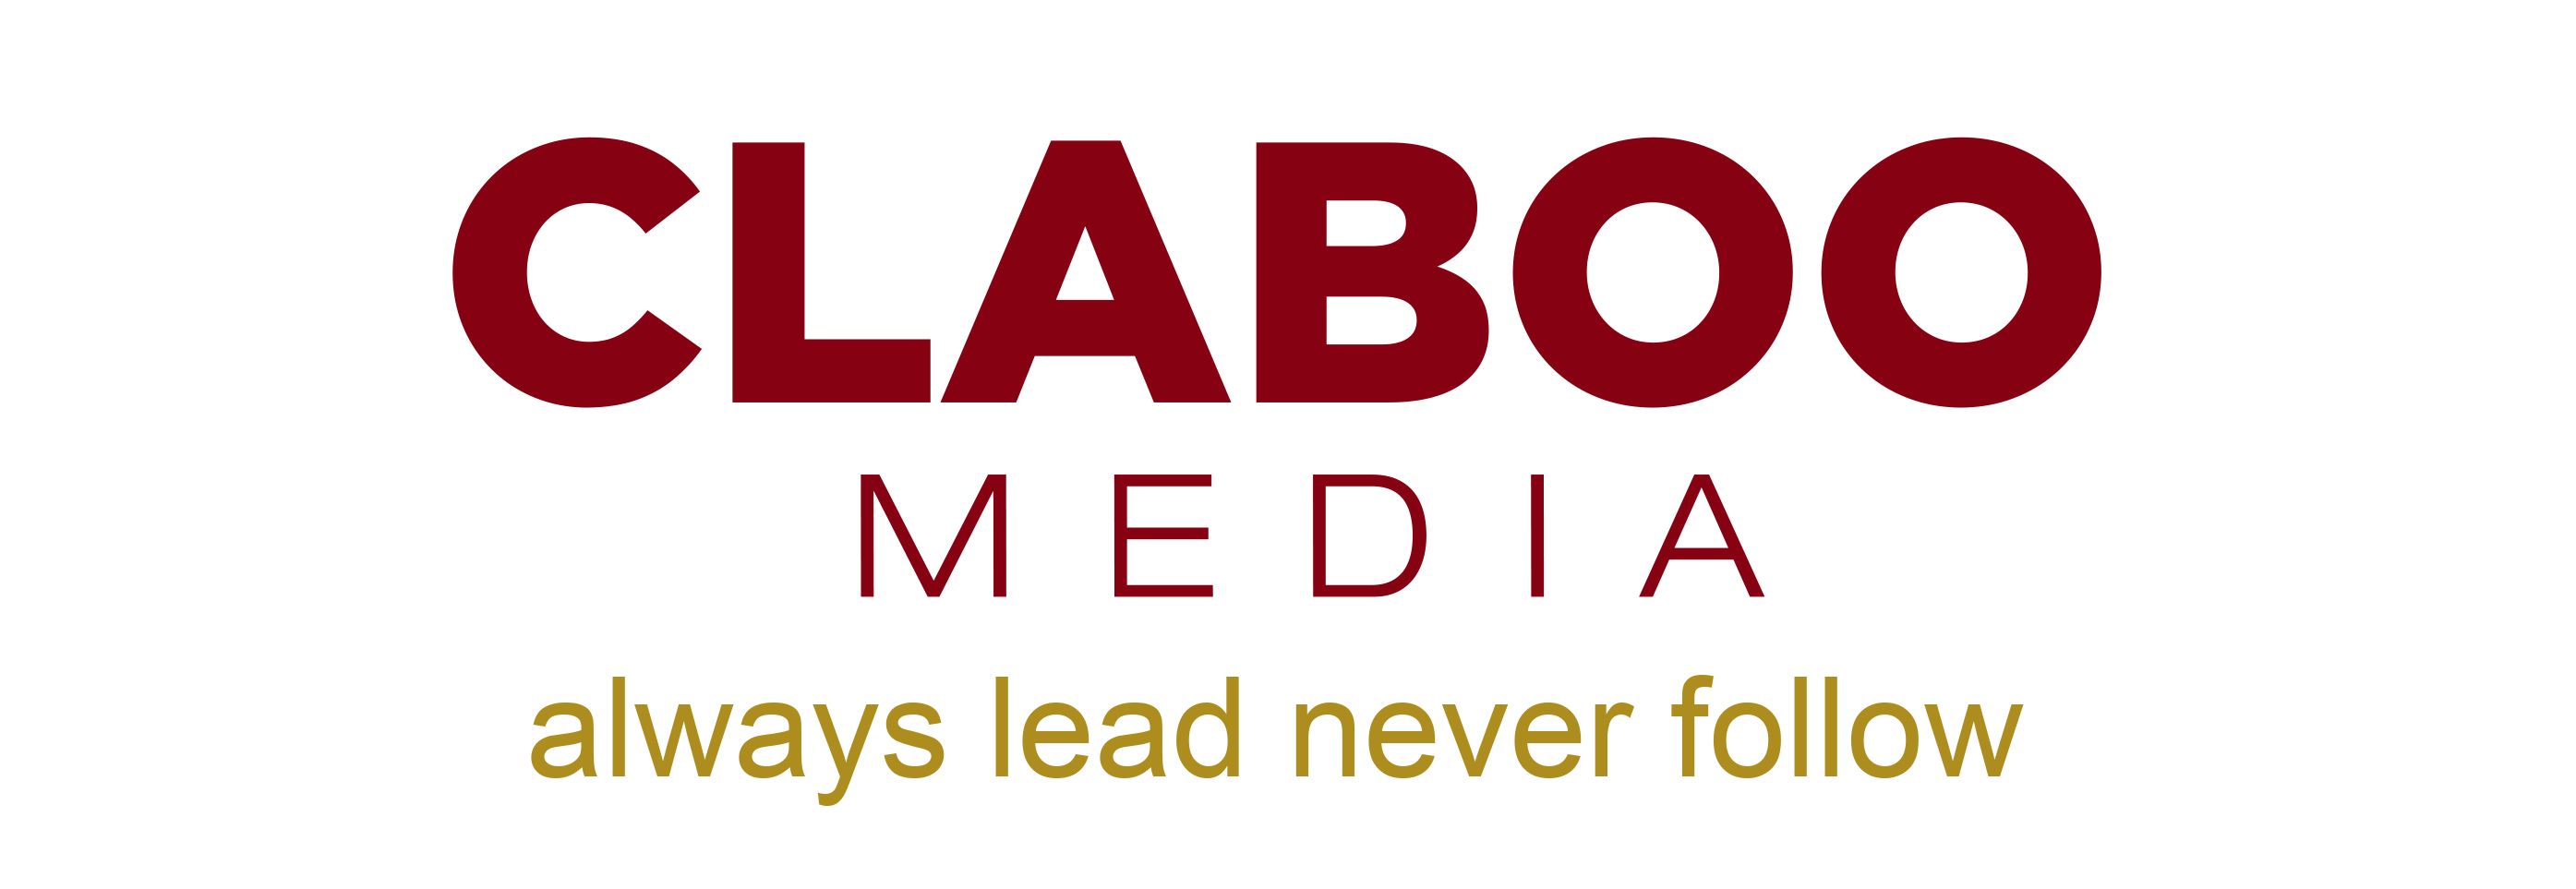 Claboo Media